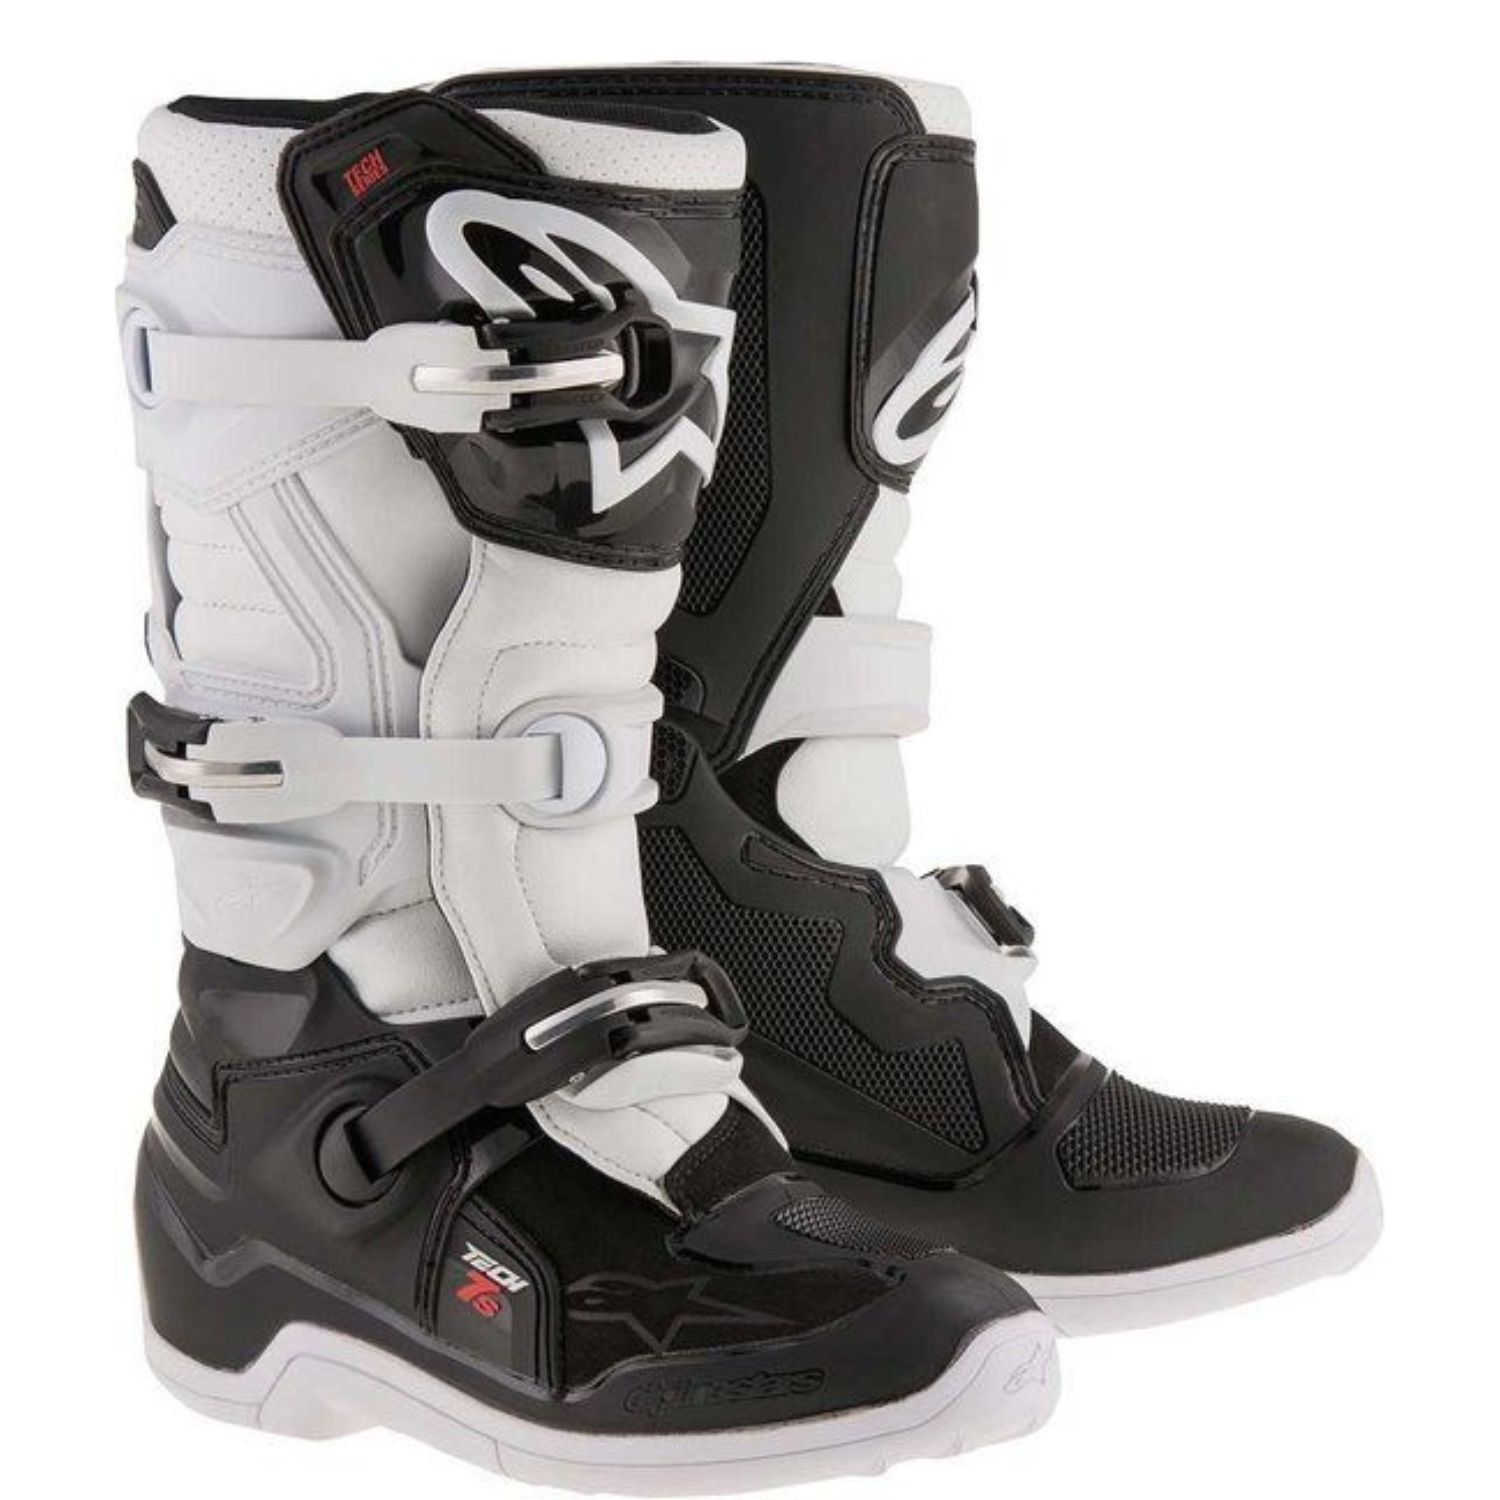 Image of Alpinestars Tech 7 S Black White Boots Size US 5 ID 8051194974907